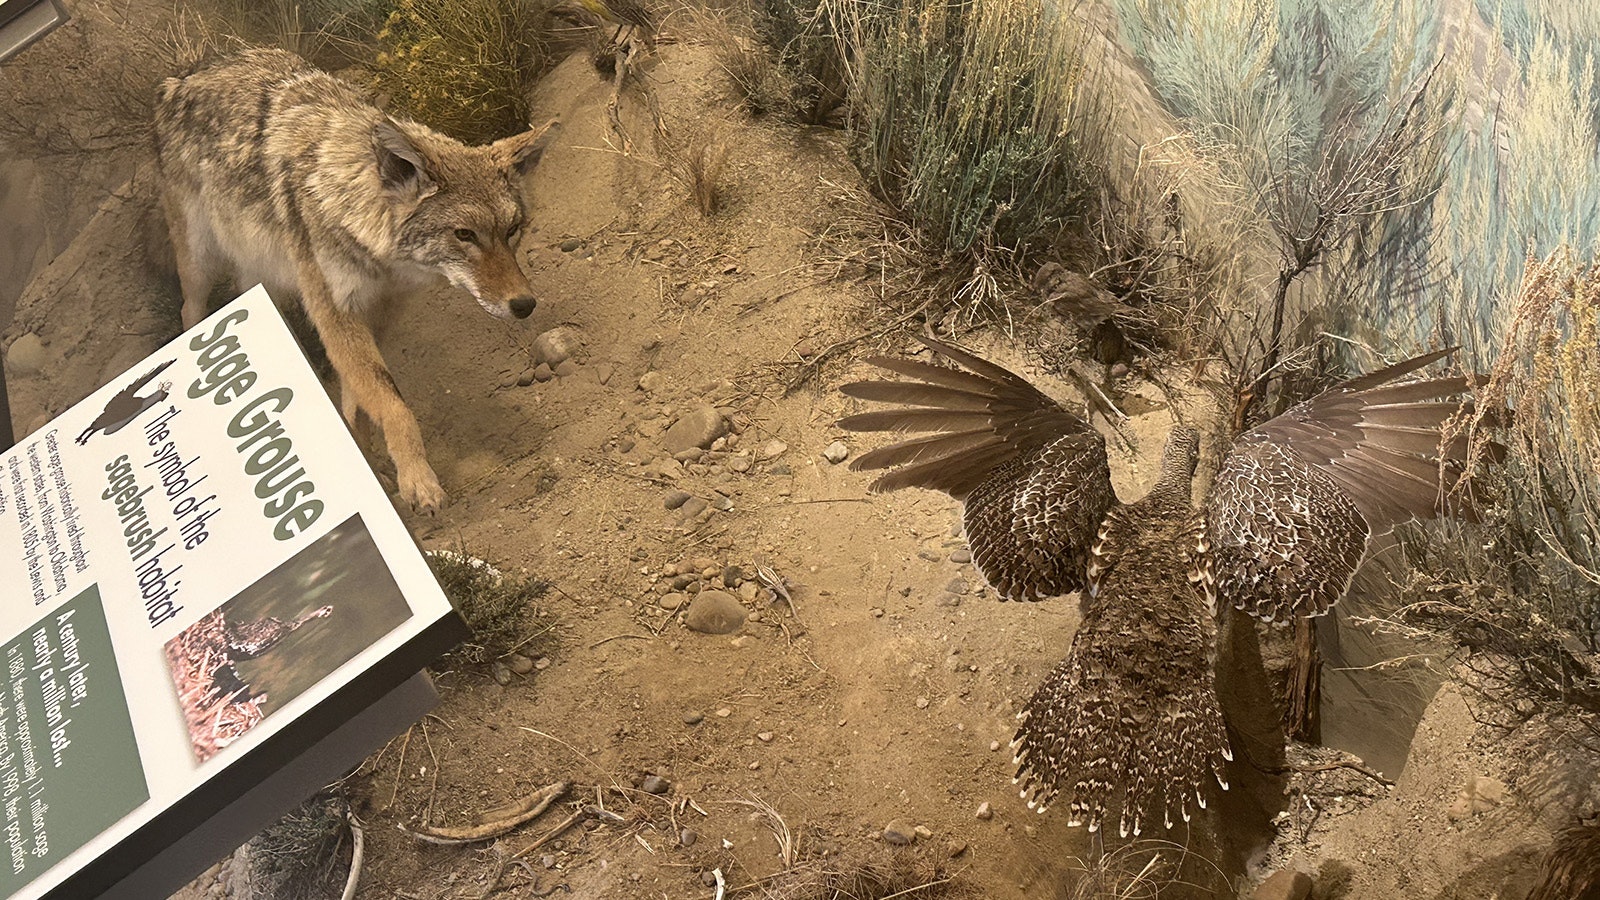 A sage grouse exhibit at the Seedskadee National Wildlife Refuge.